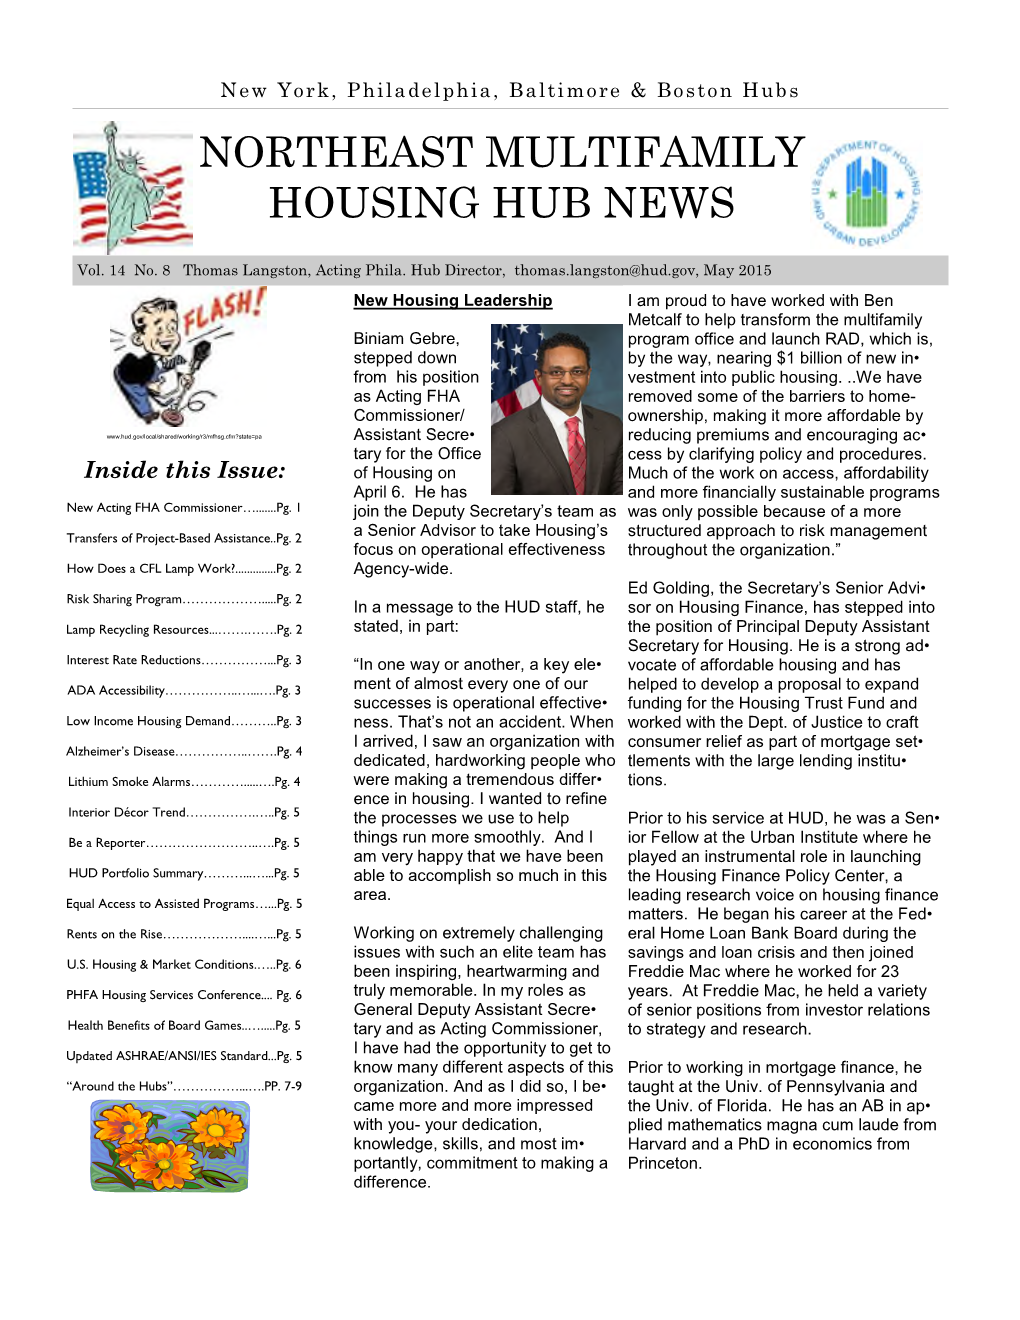 Northeast Multifamily Housing Hub News